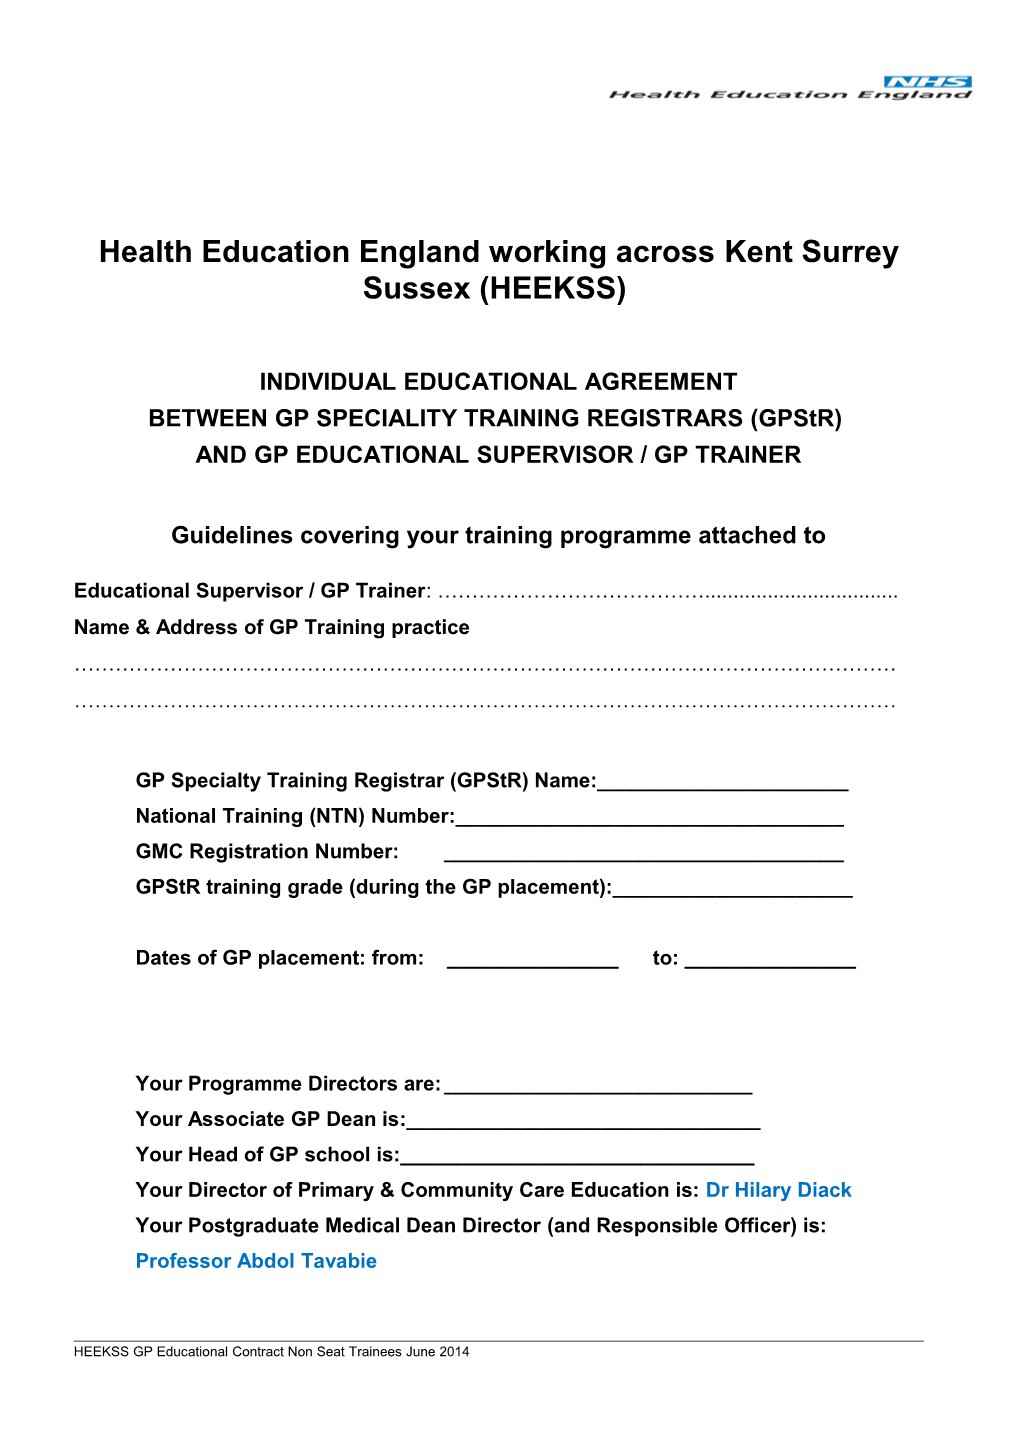 Health Education England Working Across Kent Surrey Sussex (HEEKSS)